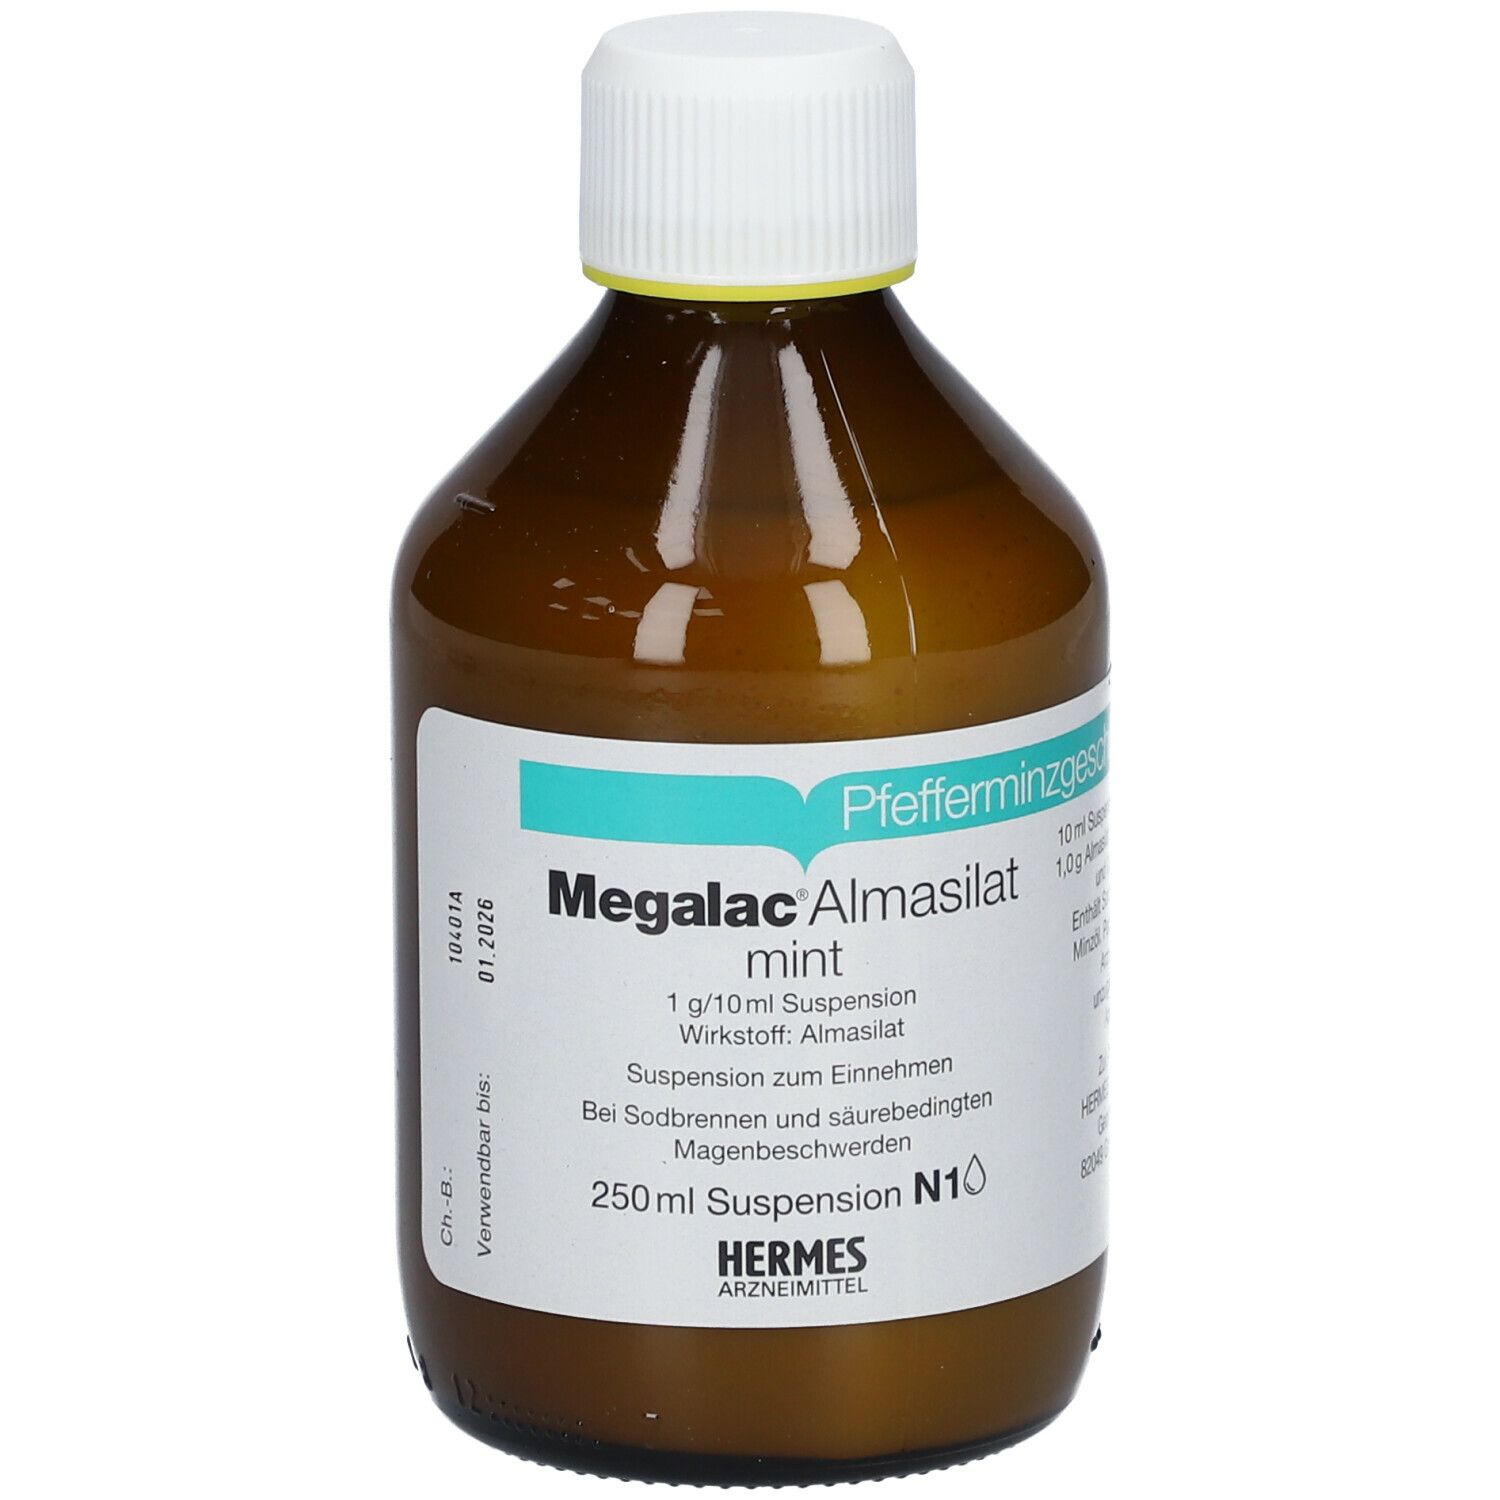 Megalac® Almasilat mint